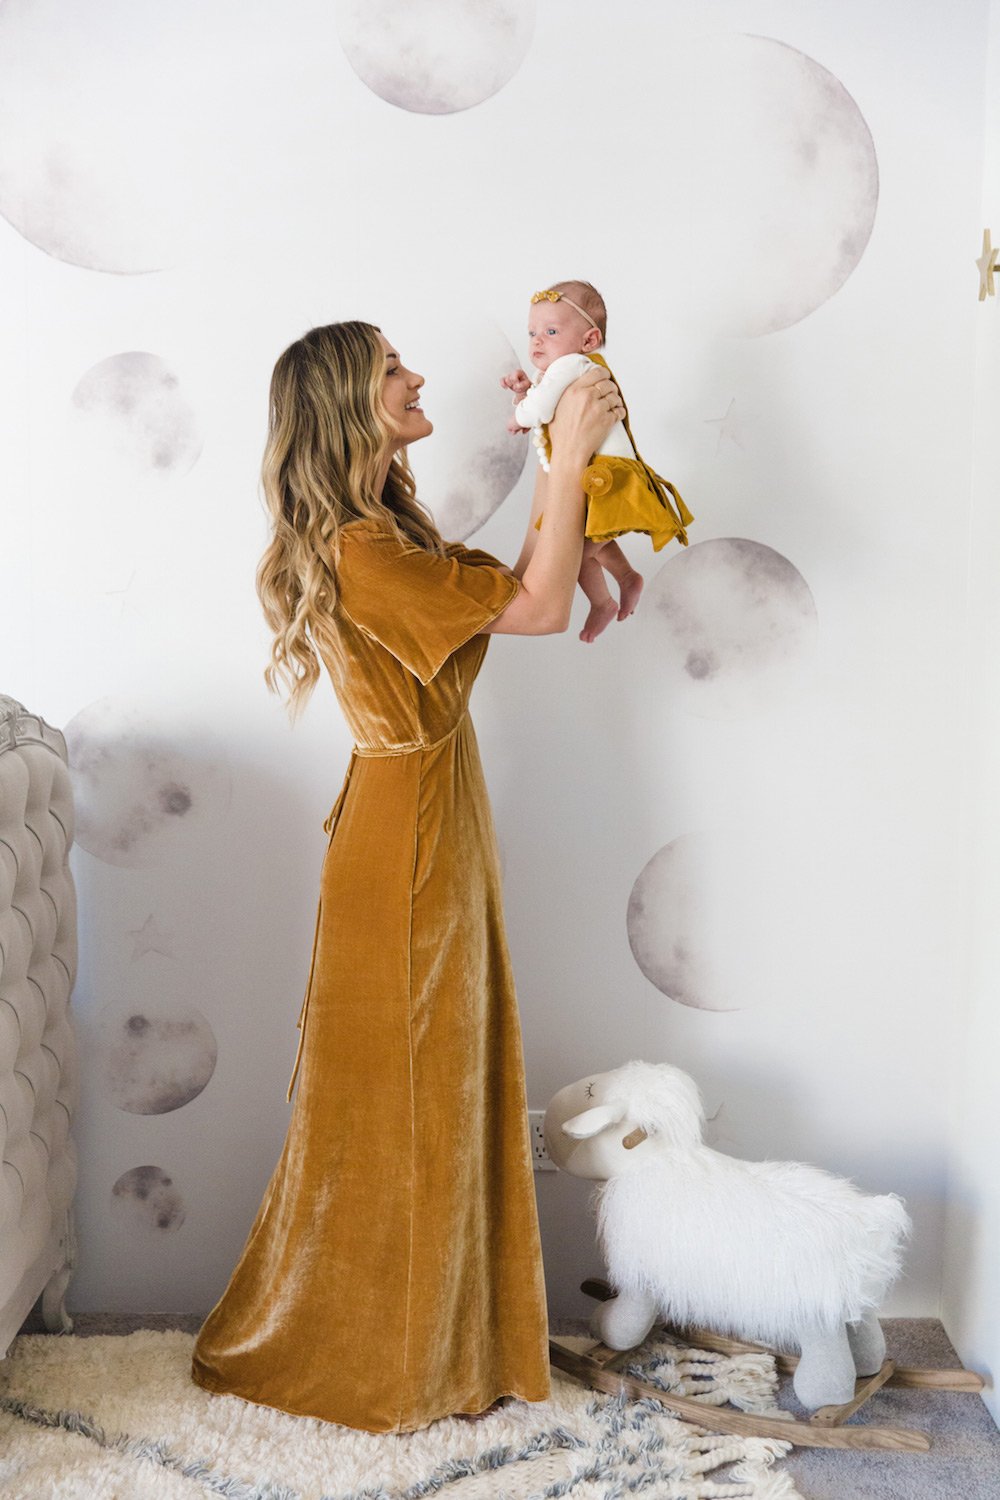 grey moon stars wallpaper baby nursery